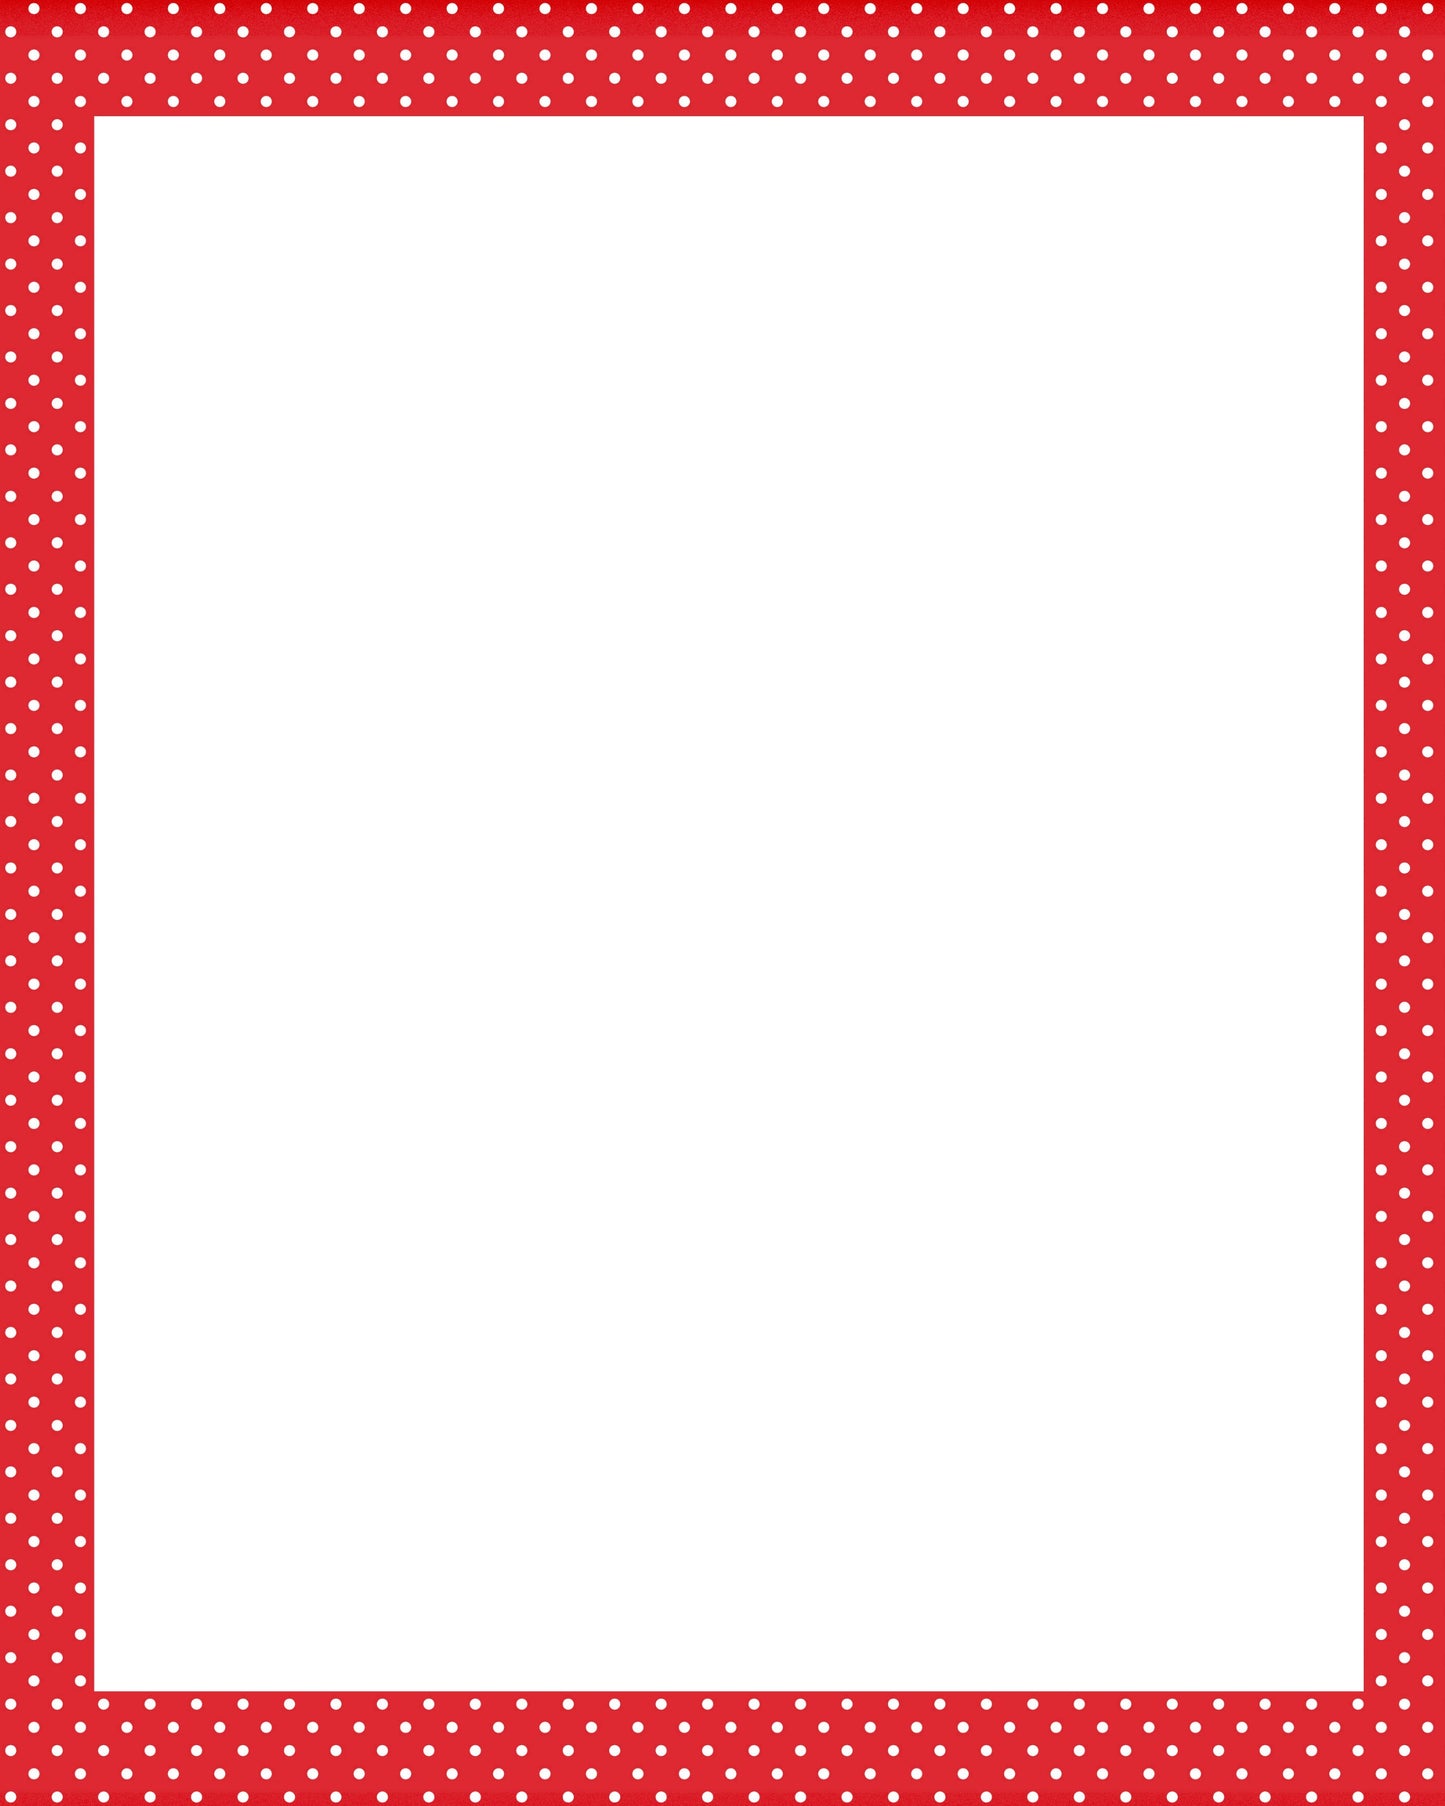 Red & White Polkadots Framed 8x10 Background